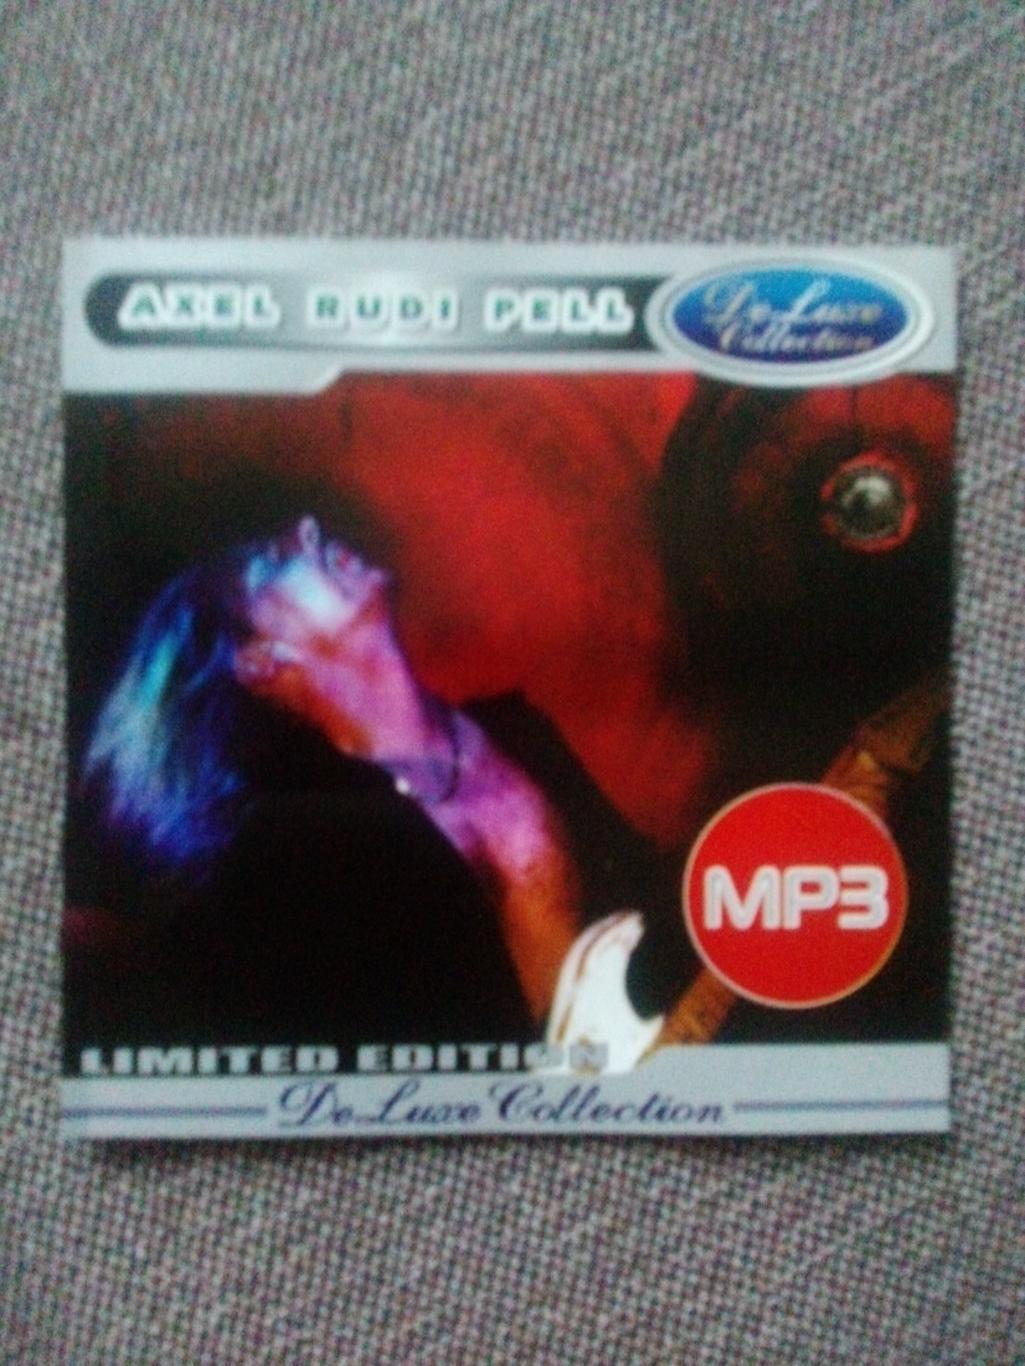 MP - 3 CD диск : группа Axel Rudi Pell 9 альбомов Hard & Heavy Рок - музыка